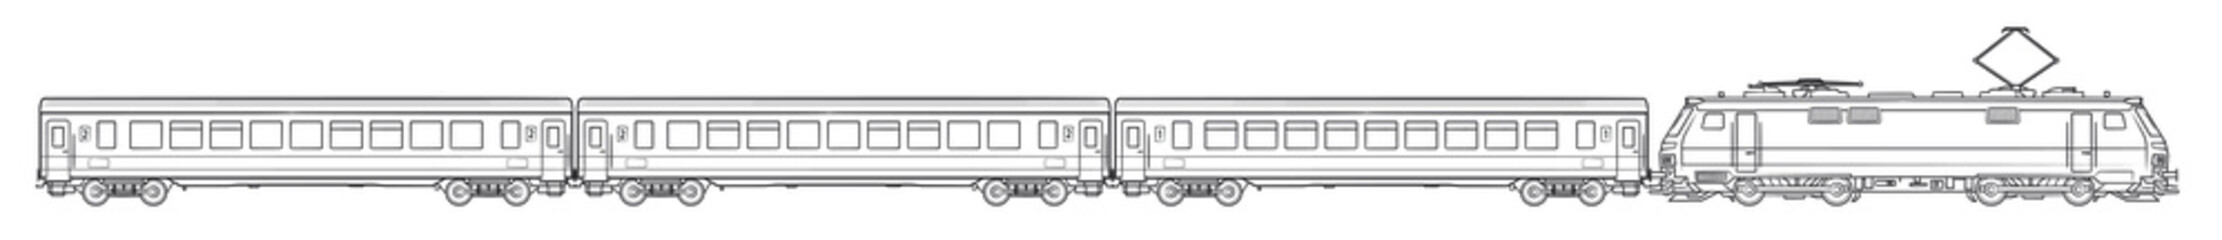 Passenger electric train - outline vector stock illustration.